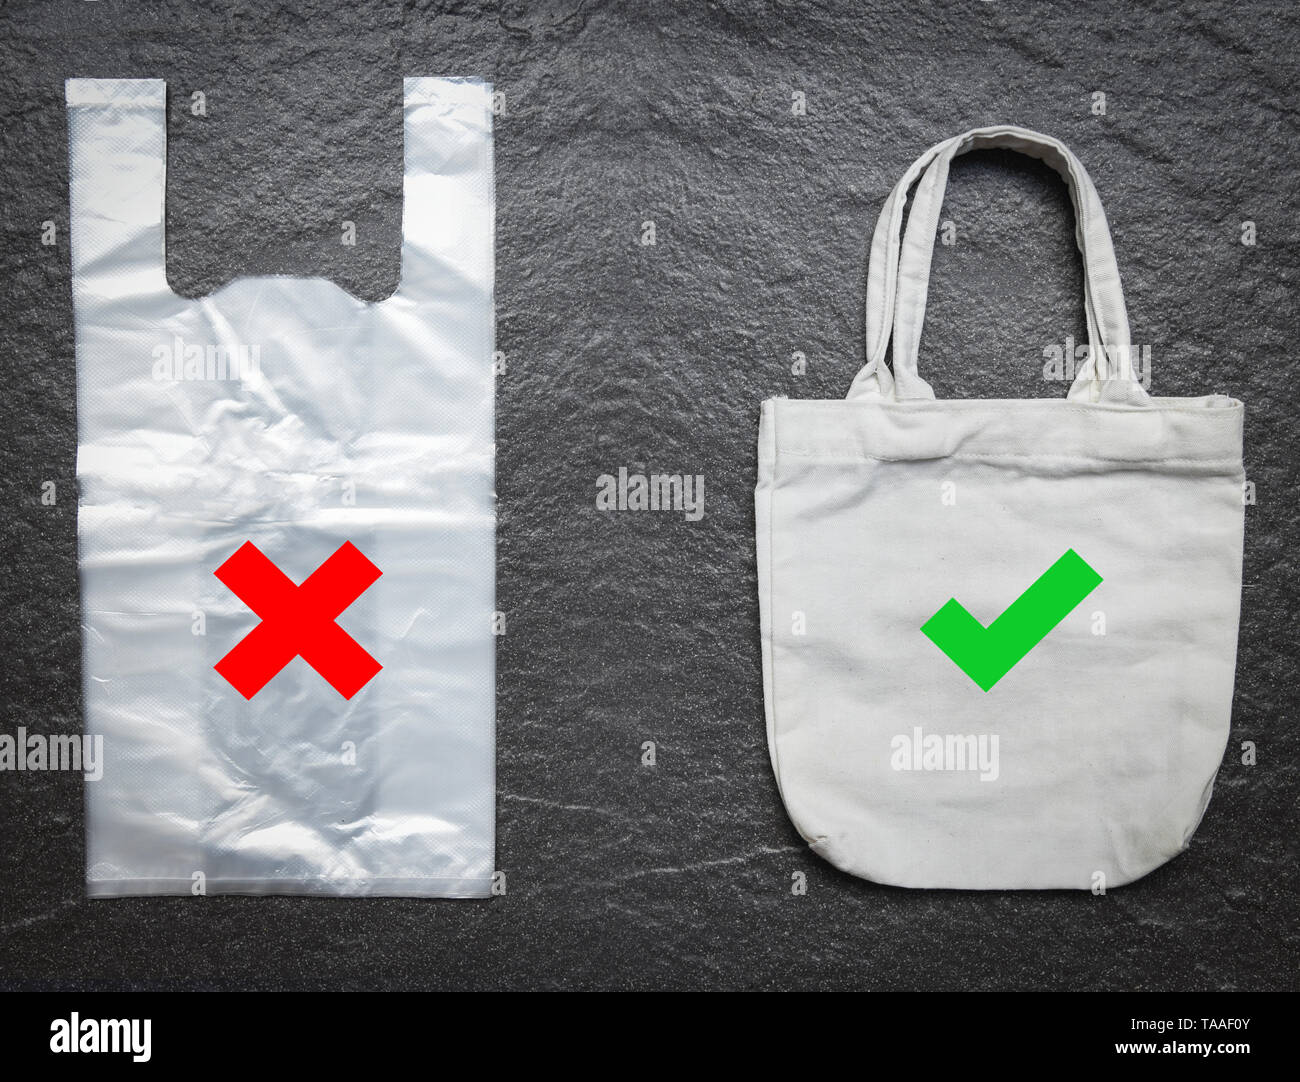 Ninguna bolsa de plástico / Use un paño de tela de lienzo bolso shopping  sustituir Di no a las bolsas de plástico con piedra de fondo oscuro -  problema de contaminación, concepto